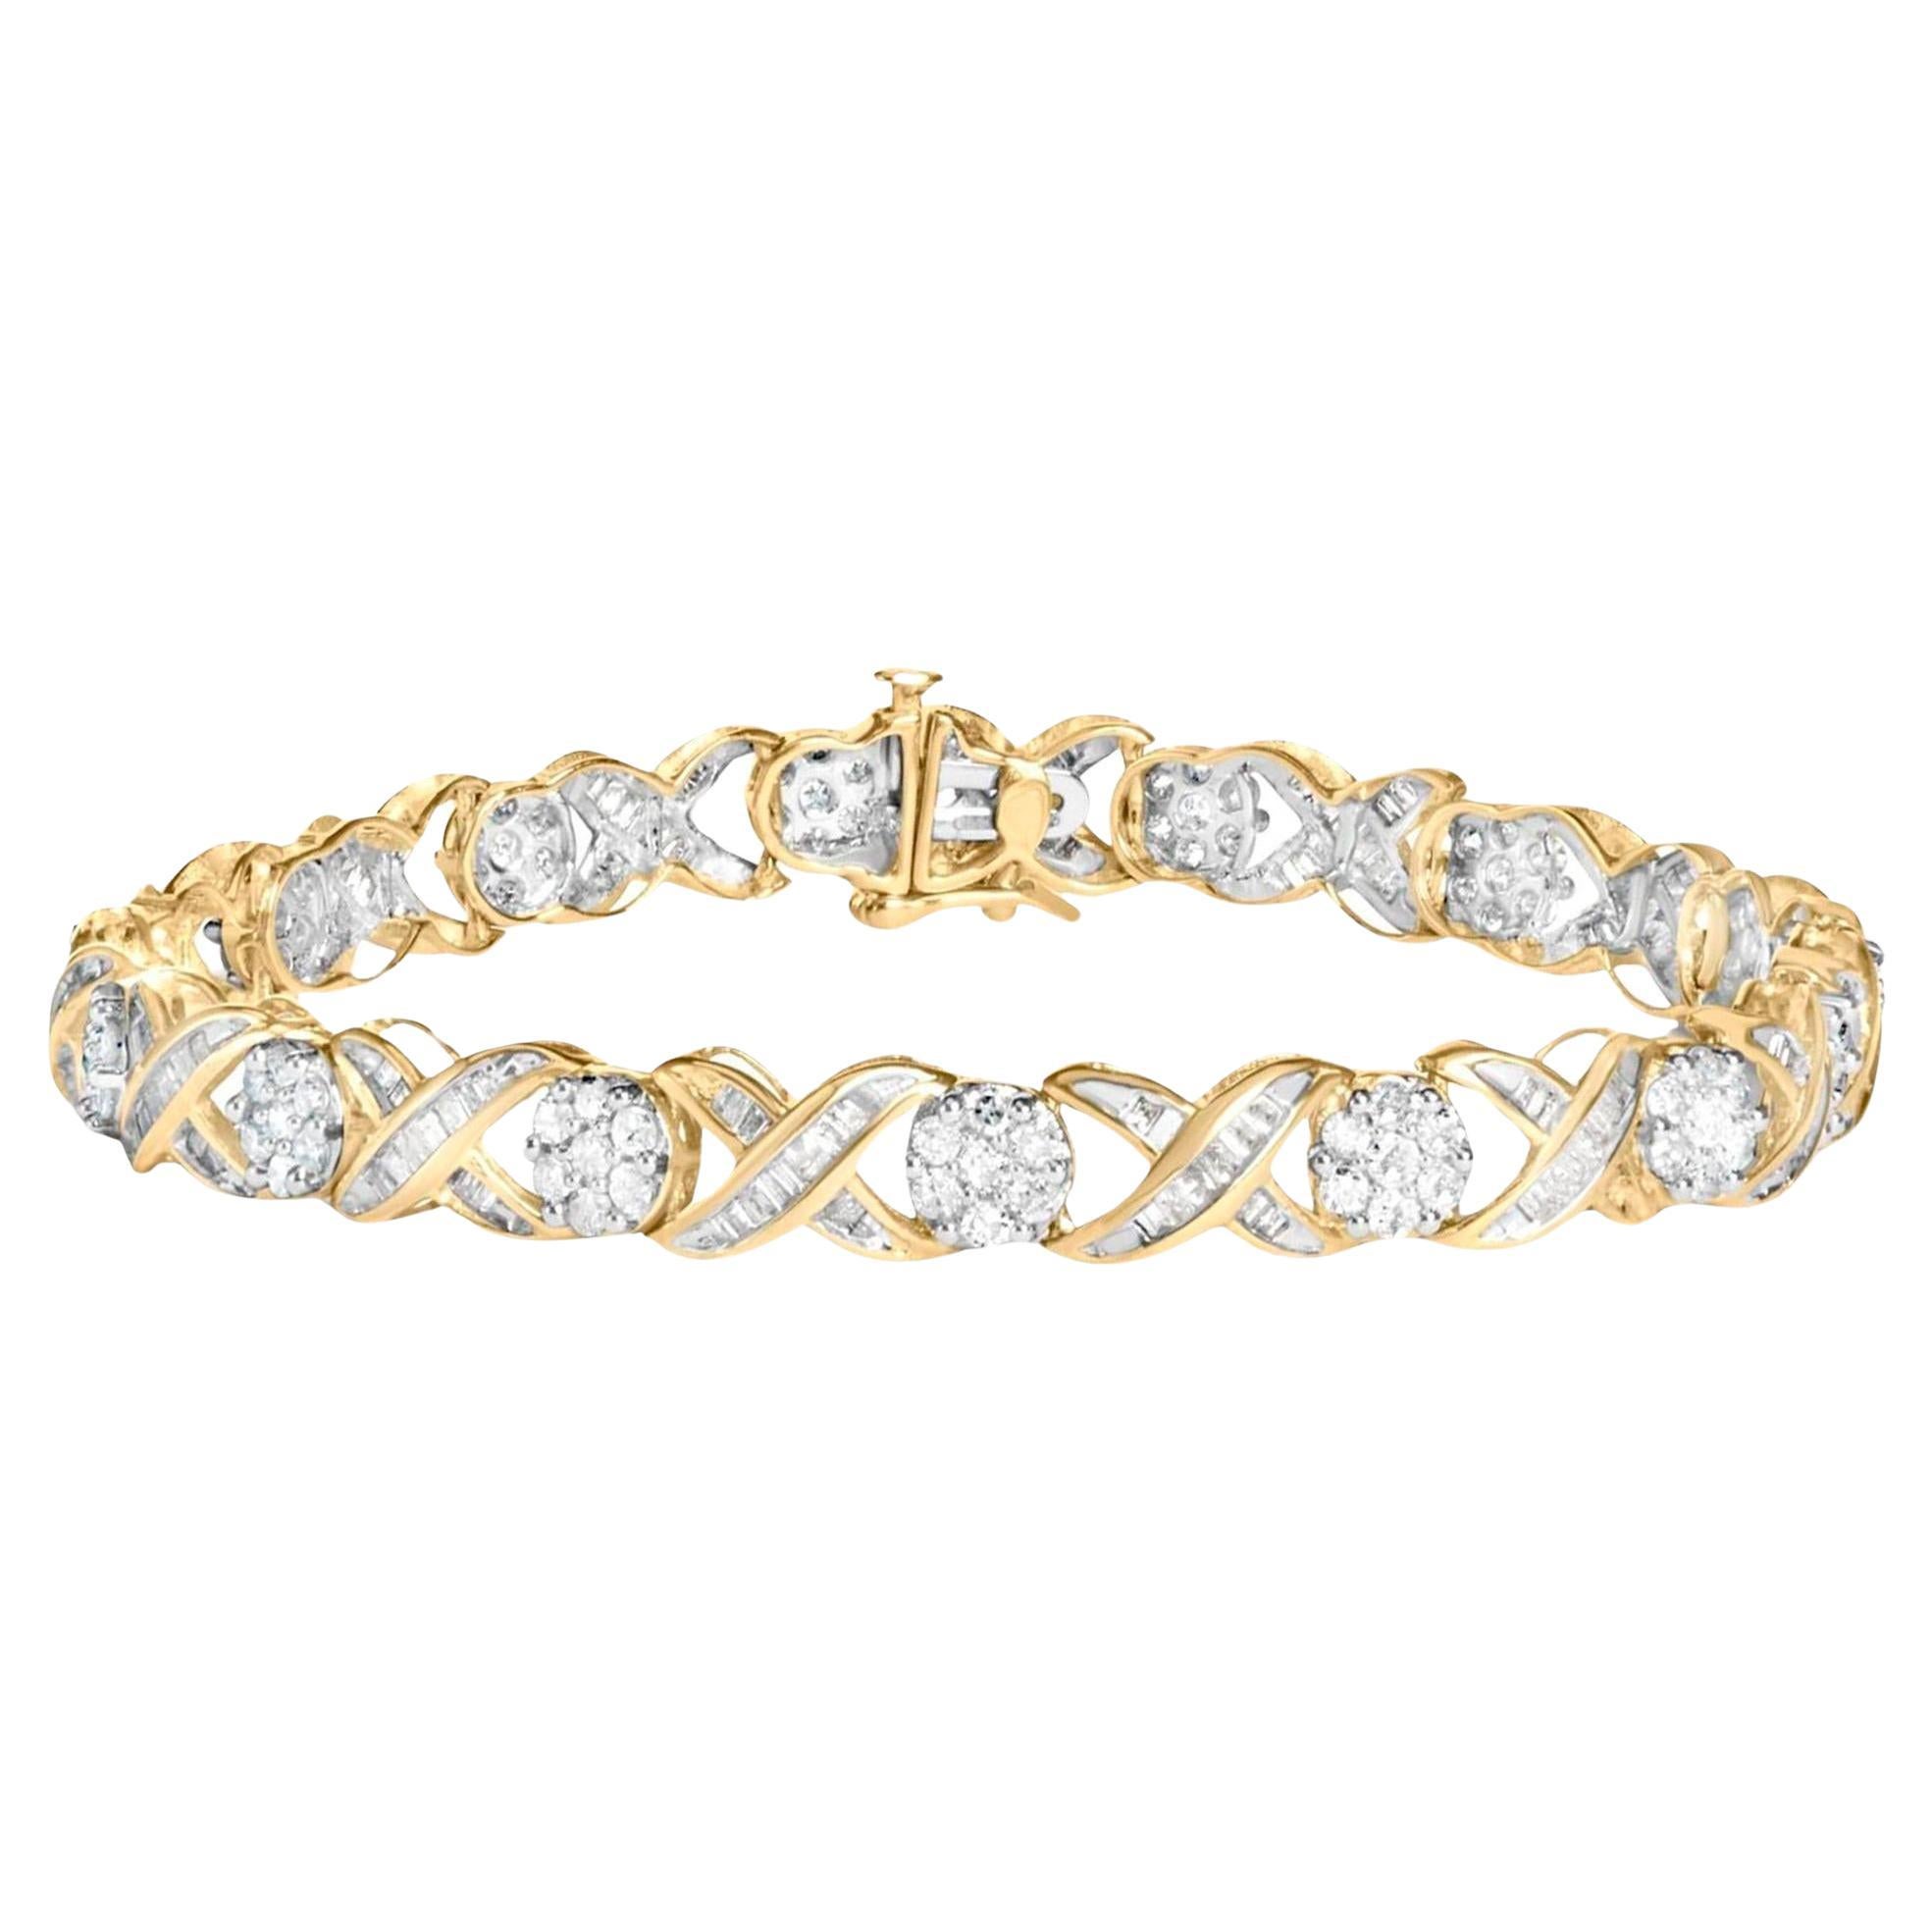 XOXO Diamond Link Bracelet Round and Baguette Cut 3 Carats 10K Yellow Gold